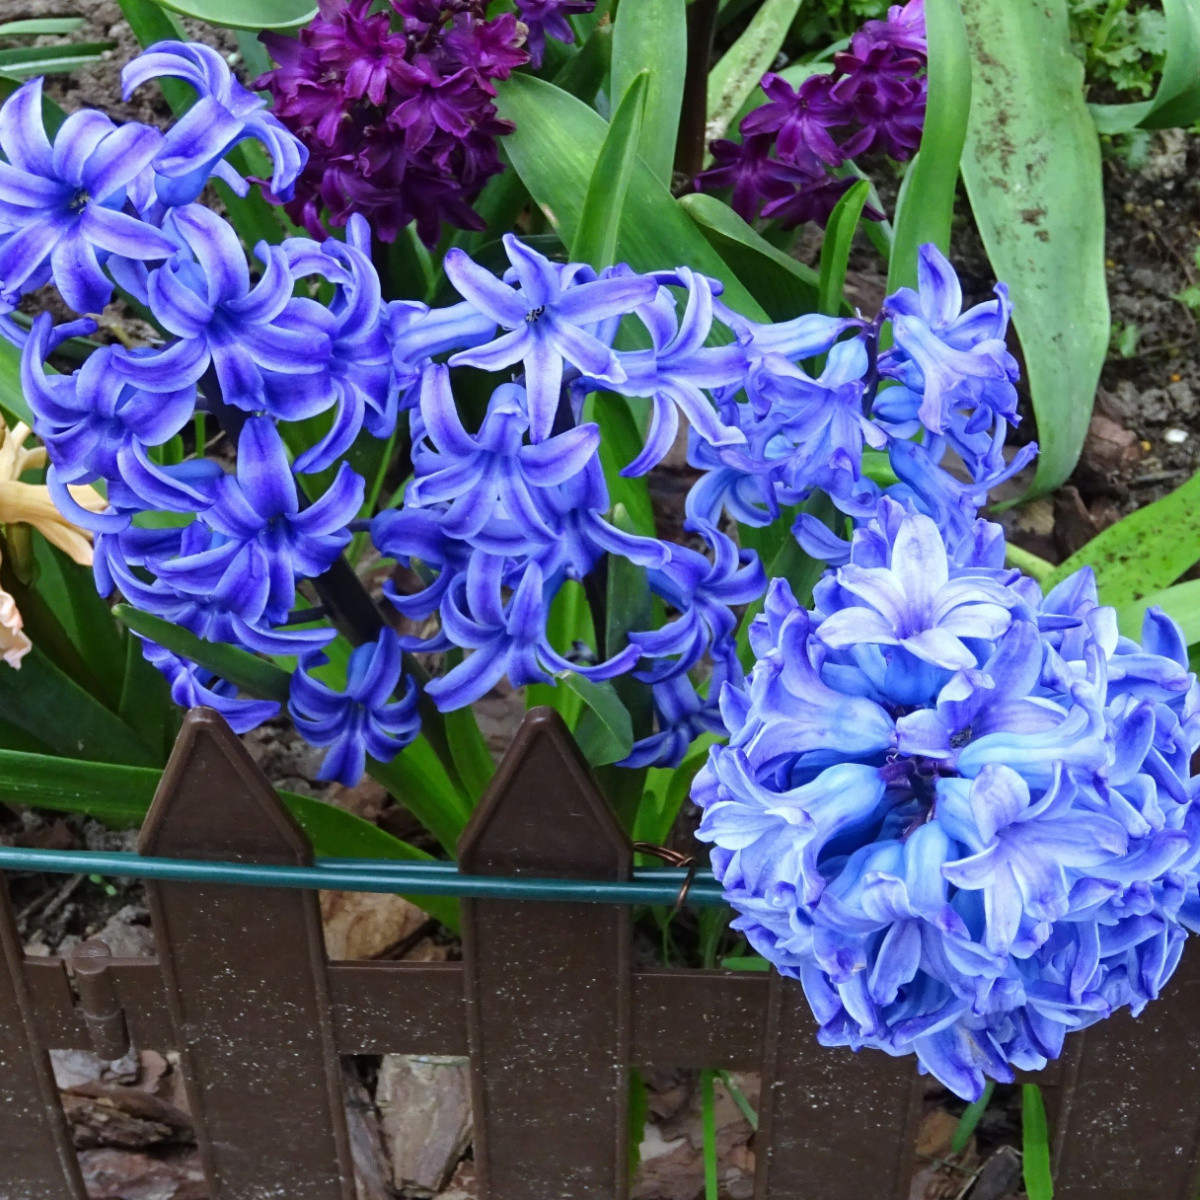 Hyacint Delft Blue - Hyacinthus orientalis - cibule hyacintu - 1 ks